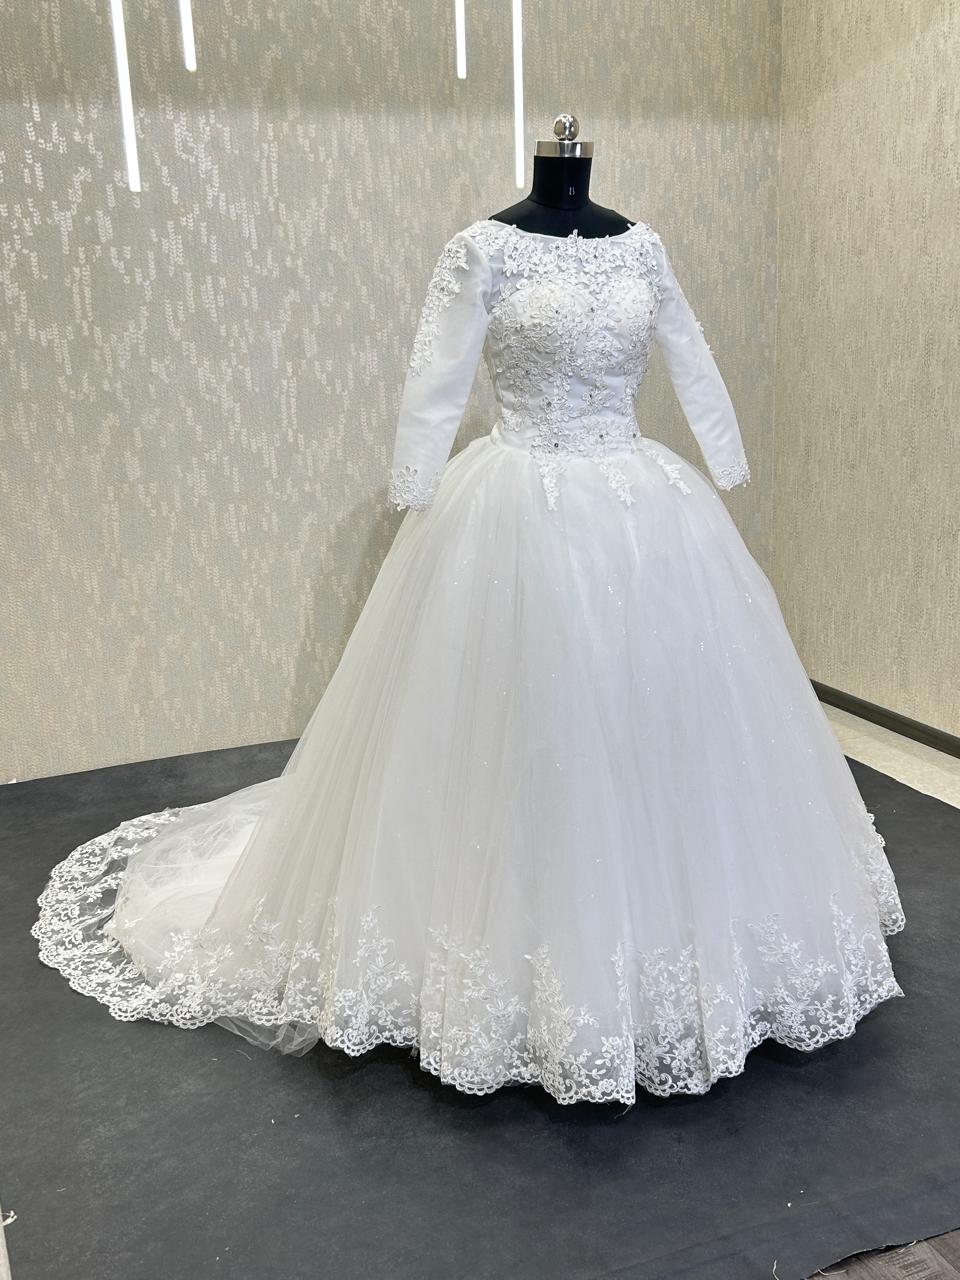 White train style wedding dress long sleeves